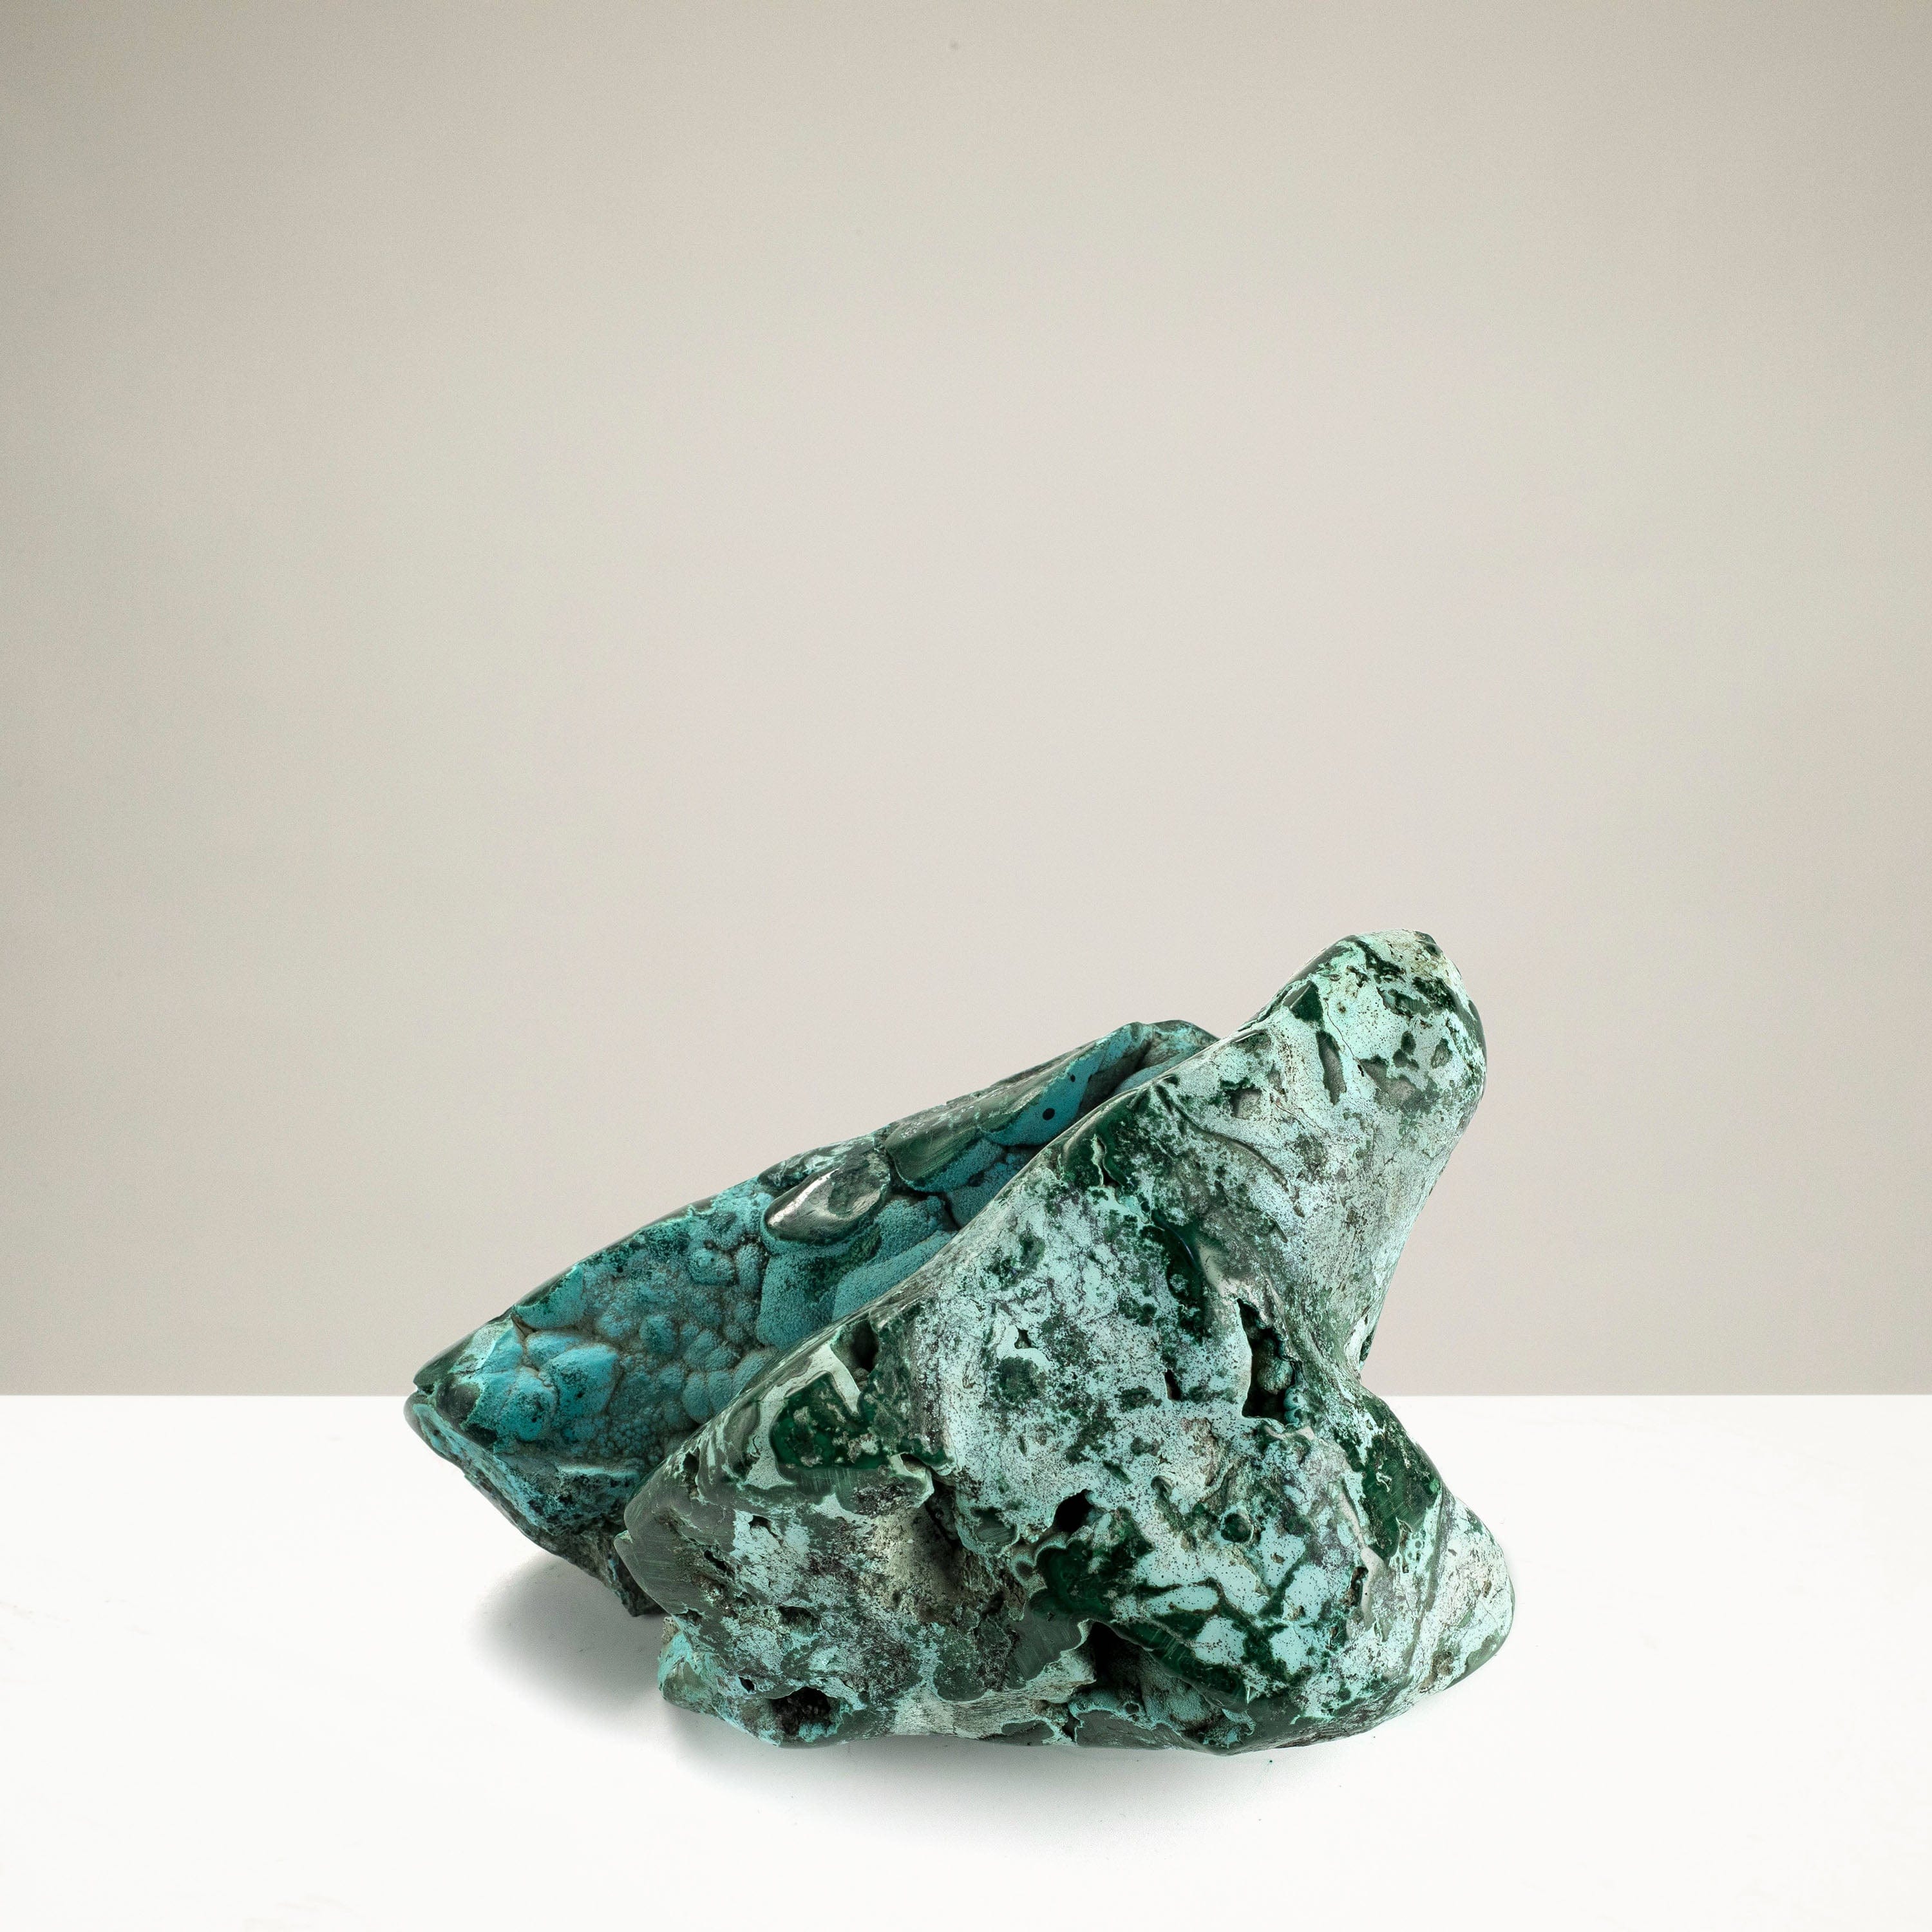 Kalifano Malachite Rare Natural Green Malachite with Blue Chrysocolla Freeform Specimen from Congo - 1 kg / 2.1 lbs MAC850.003